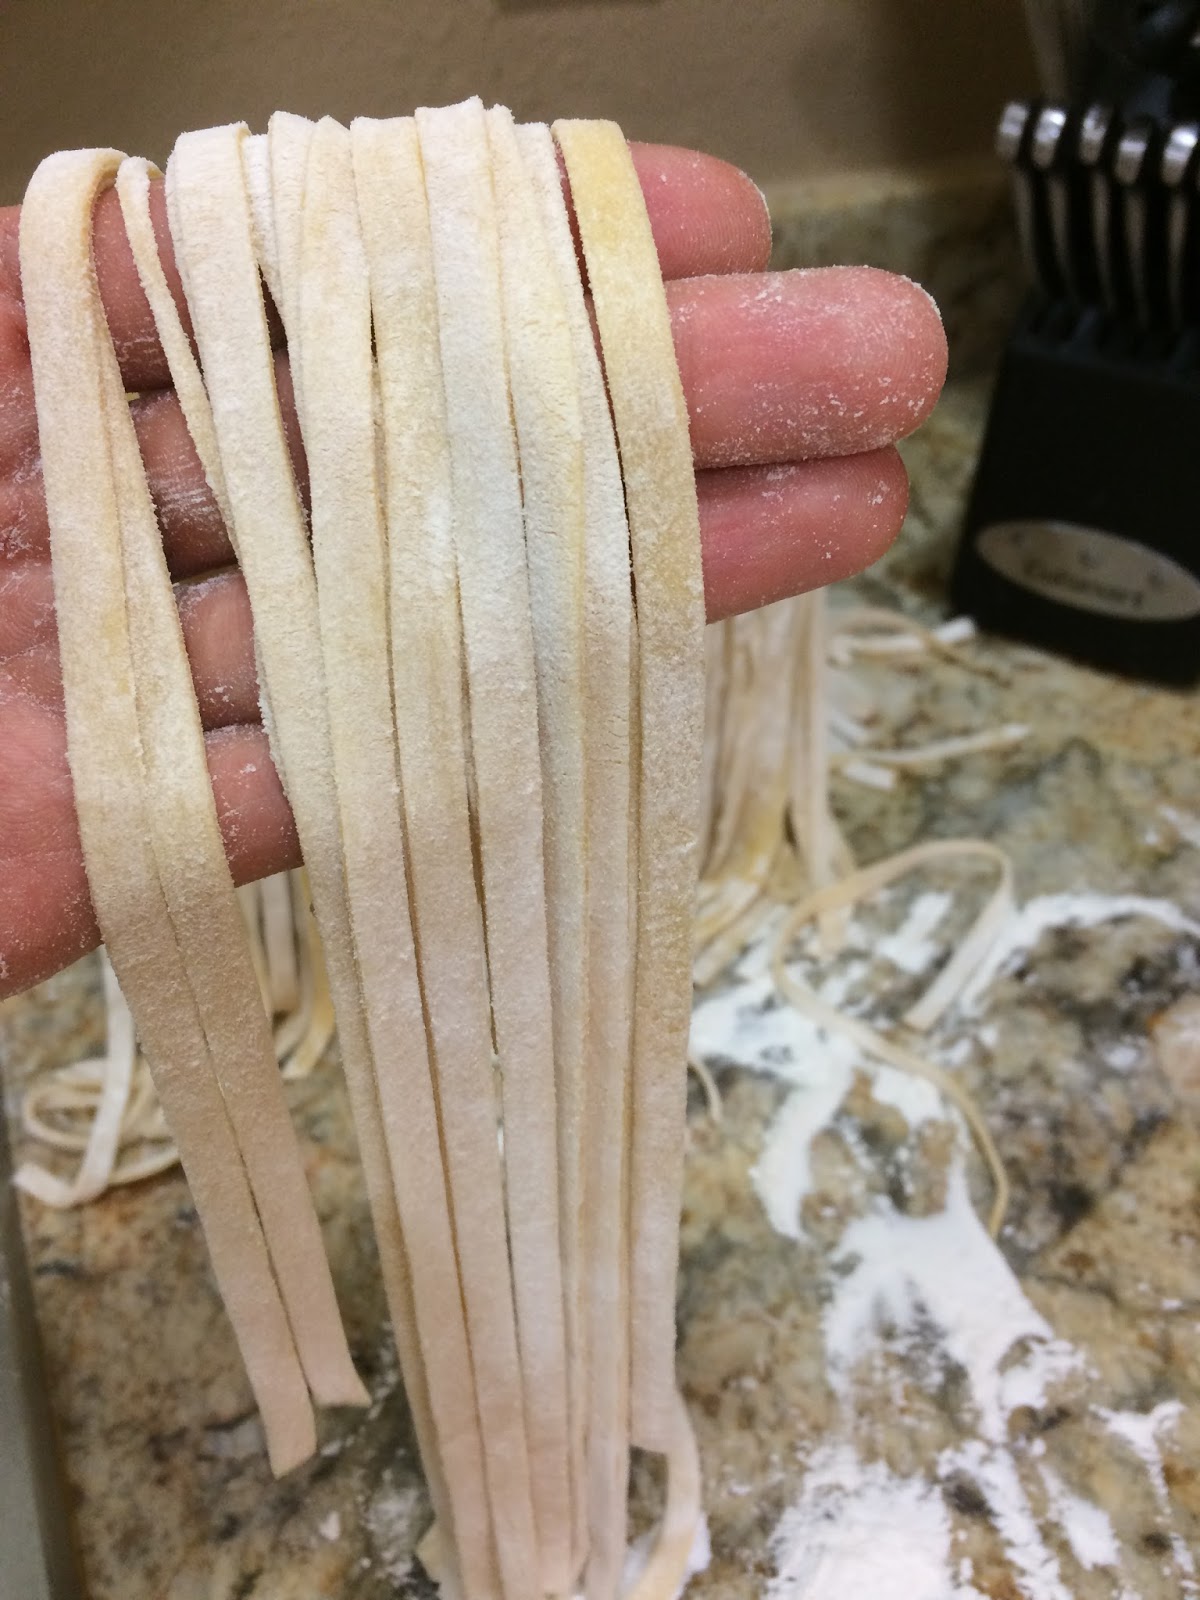 Making Fettuccine Pasta